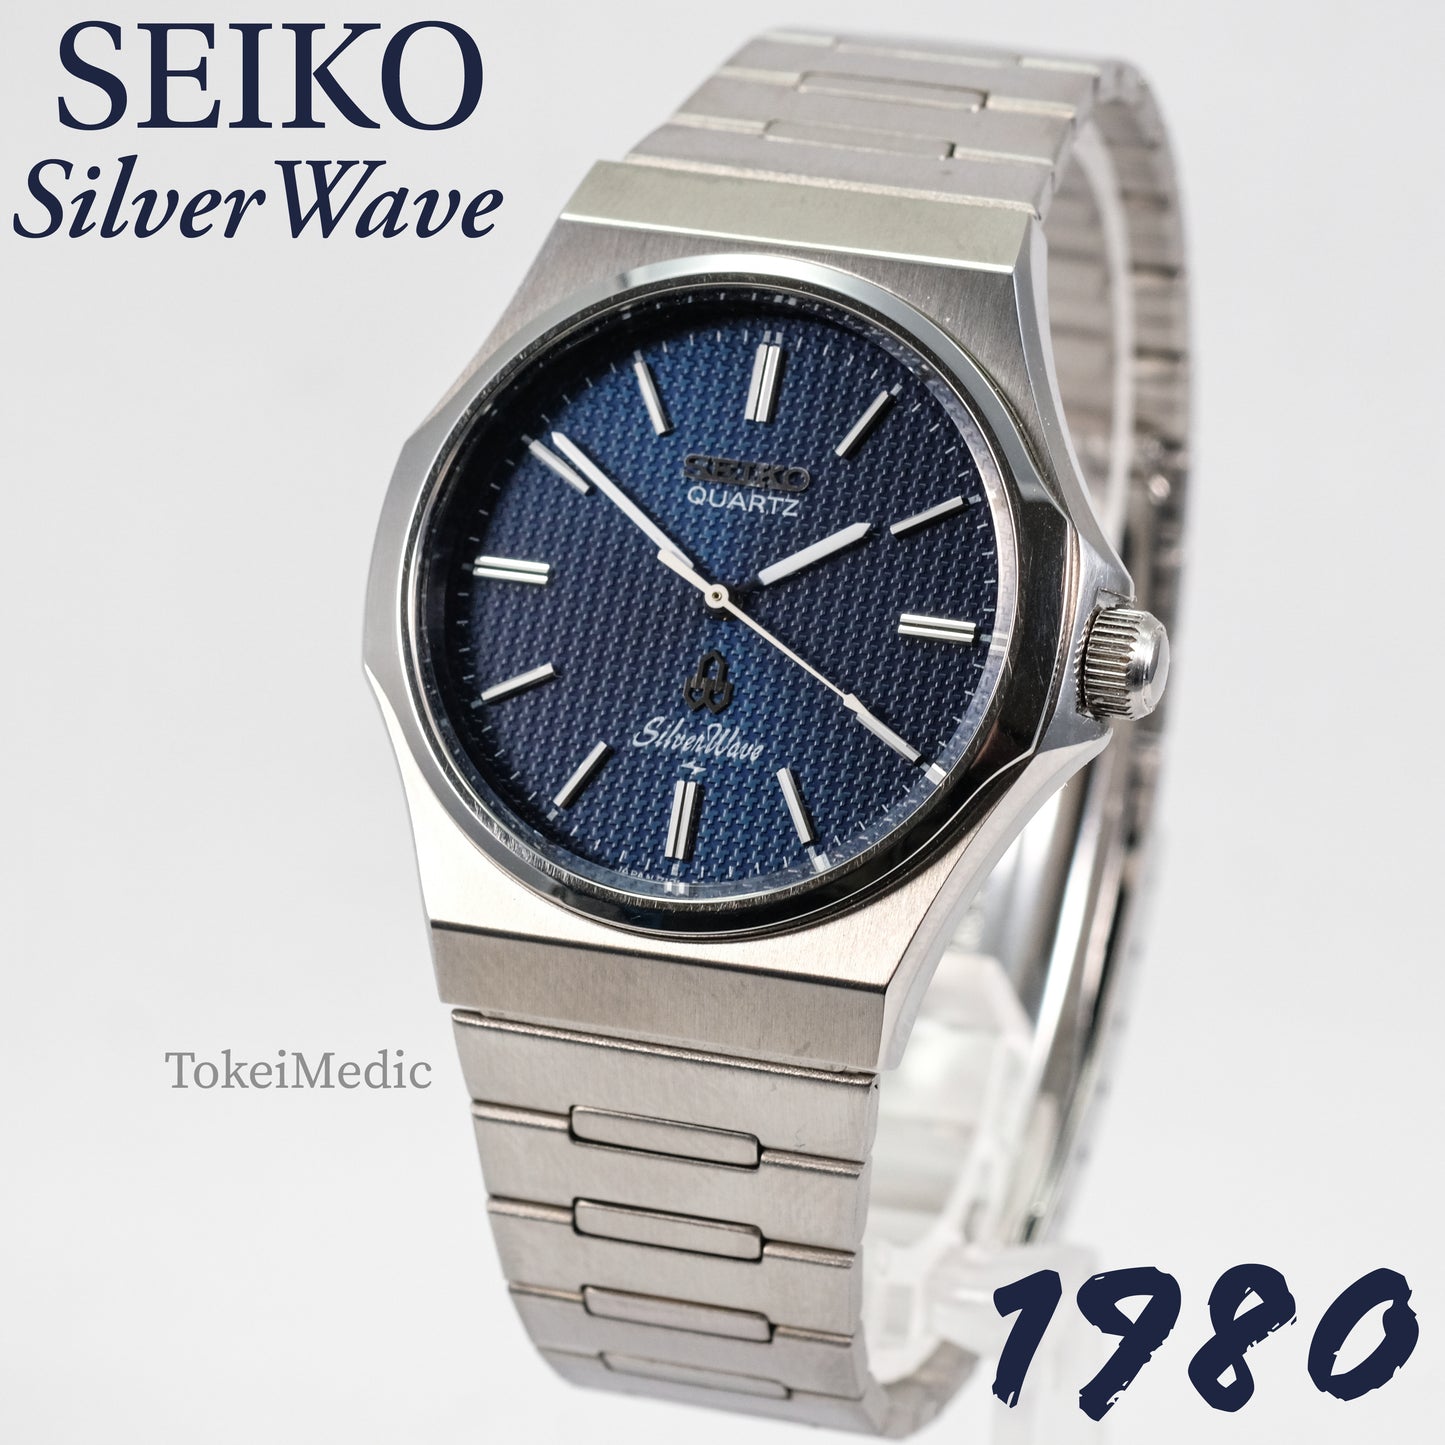 1980 Seiko Quartz SilverWave 7123-703A